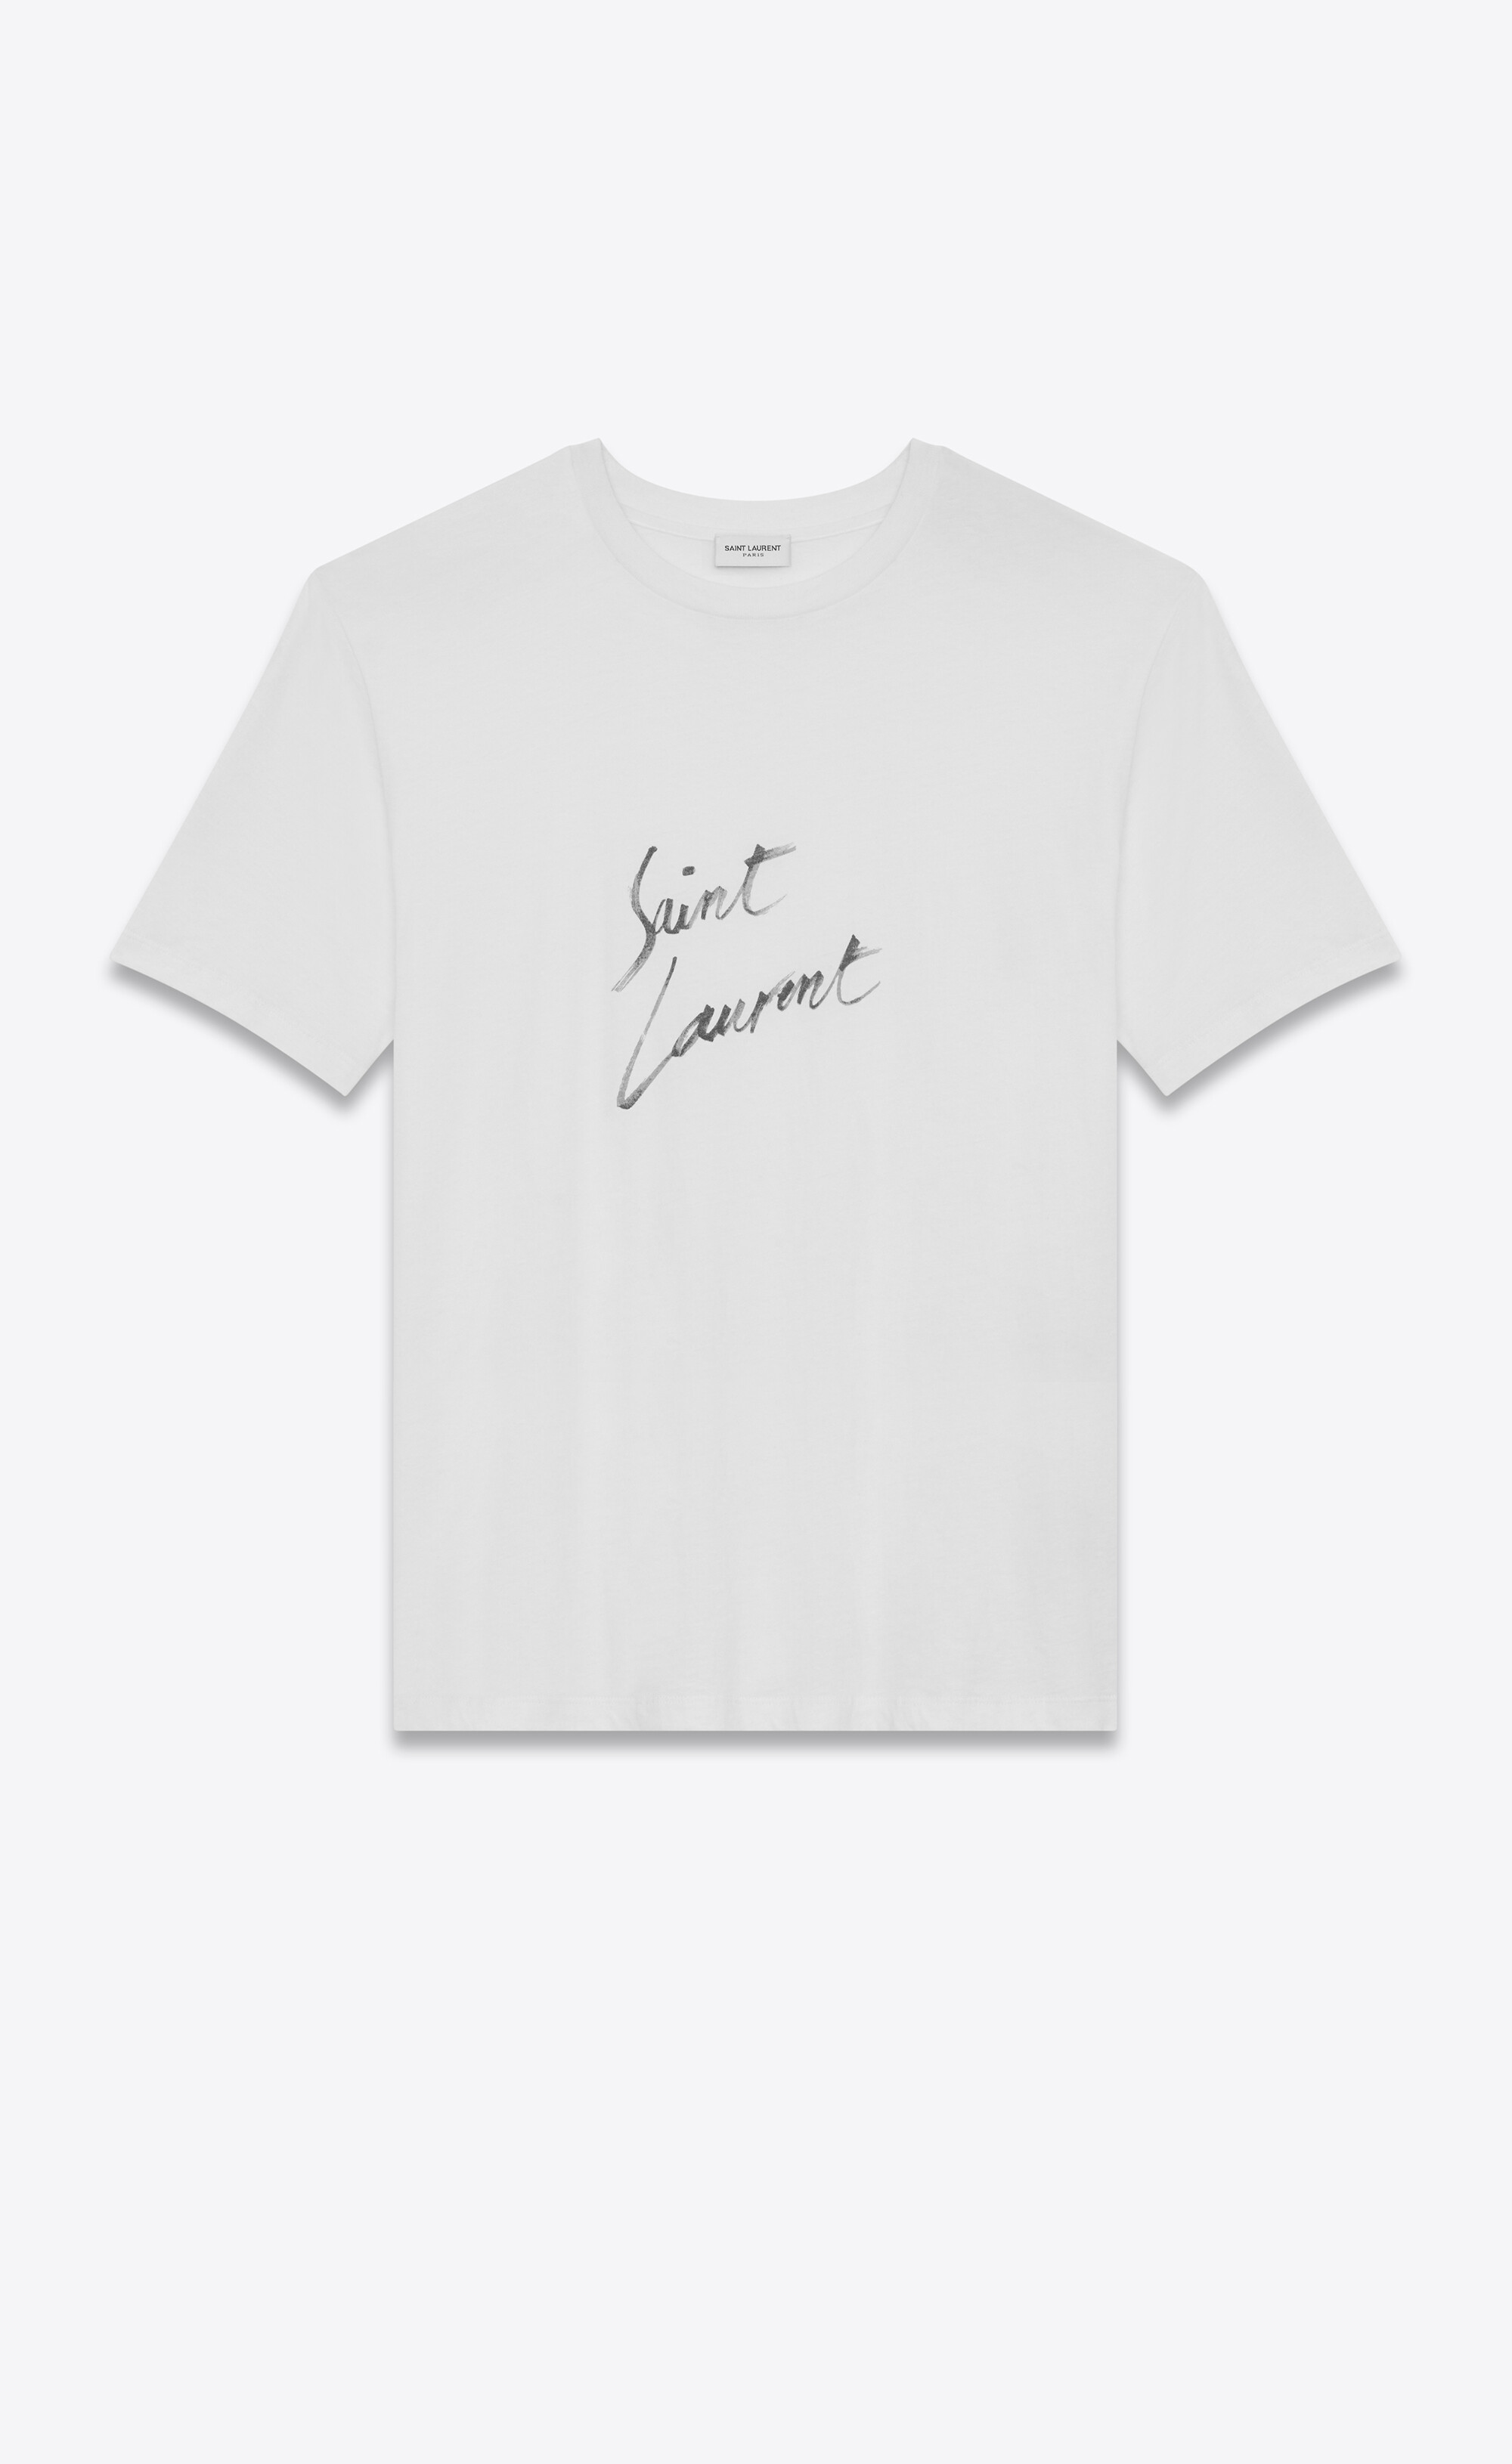 Saint Laurent T Shirt Top Sellers, 58% OFF | www.ingeniovirtual.com